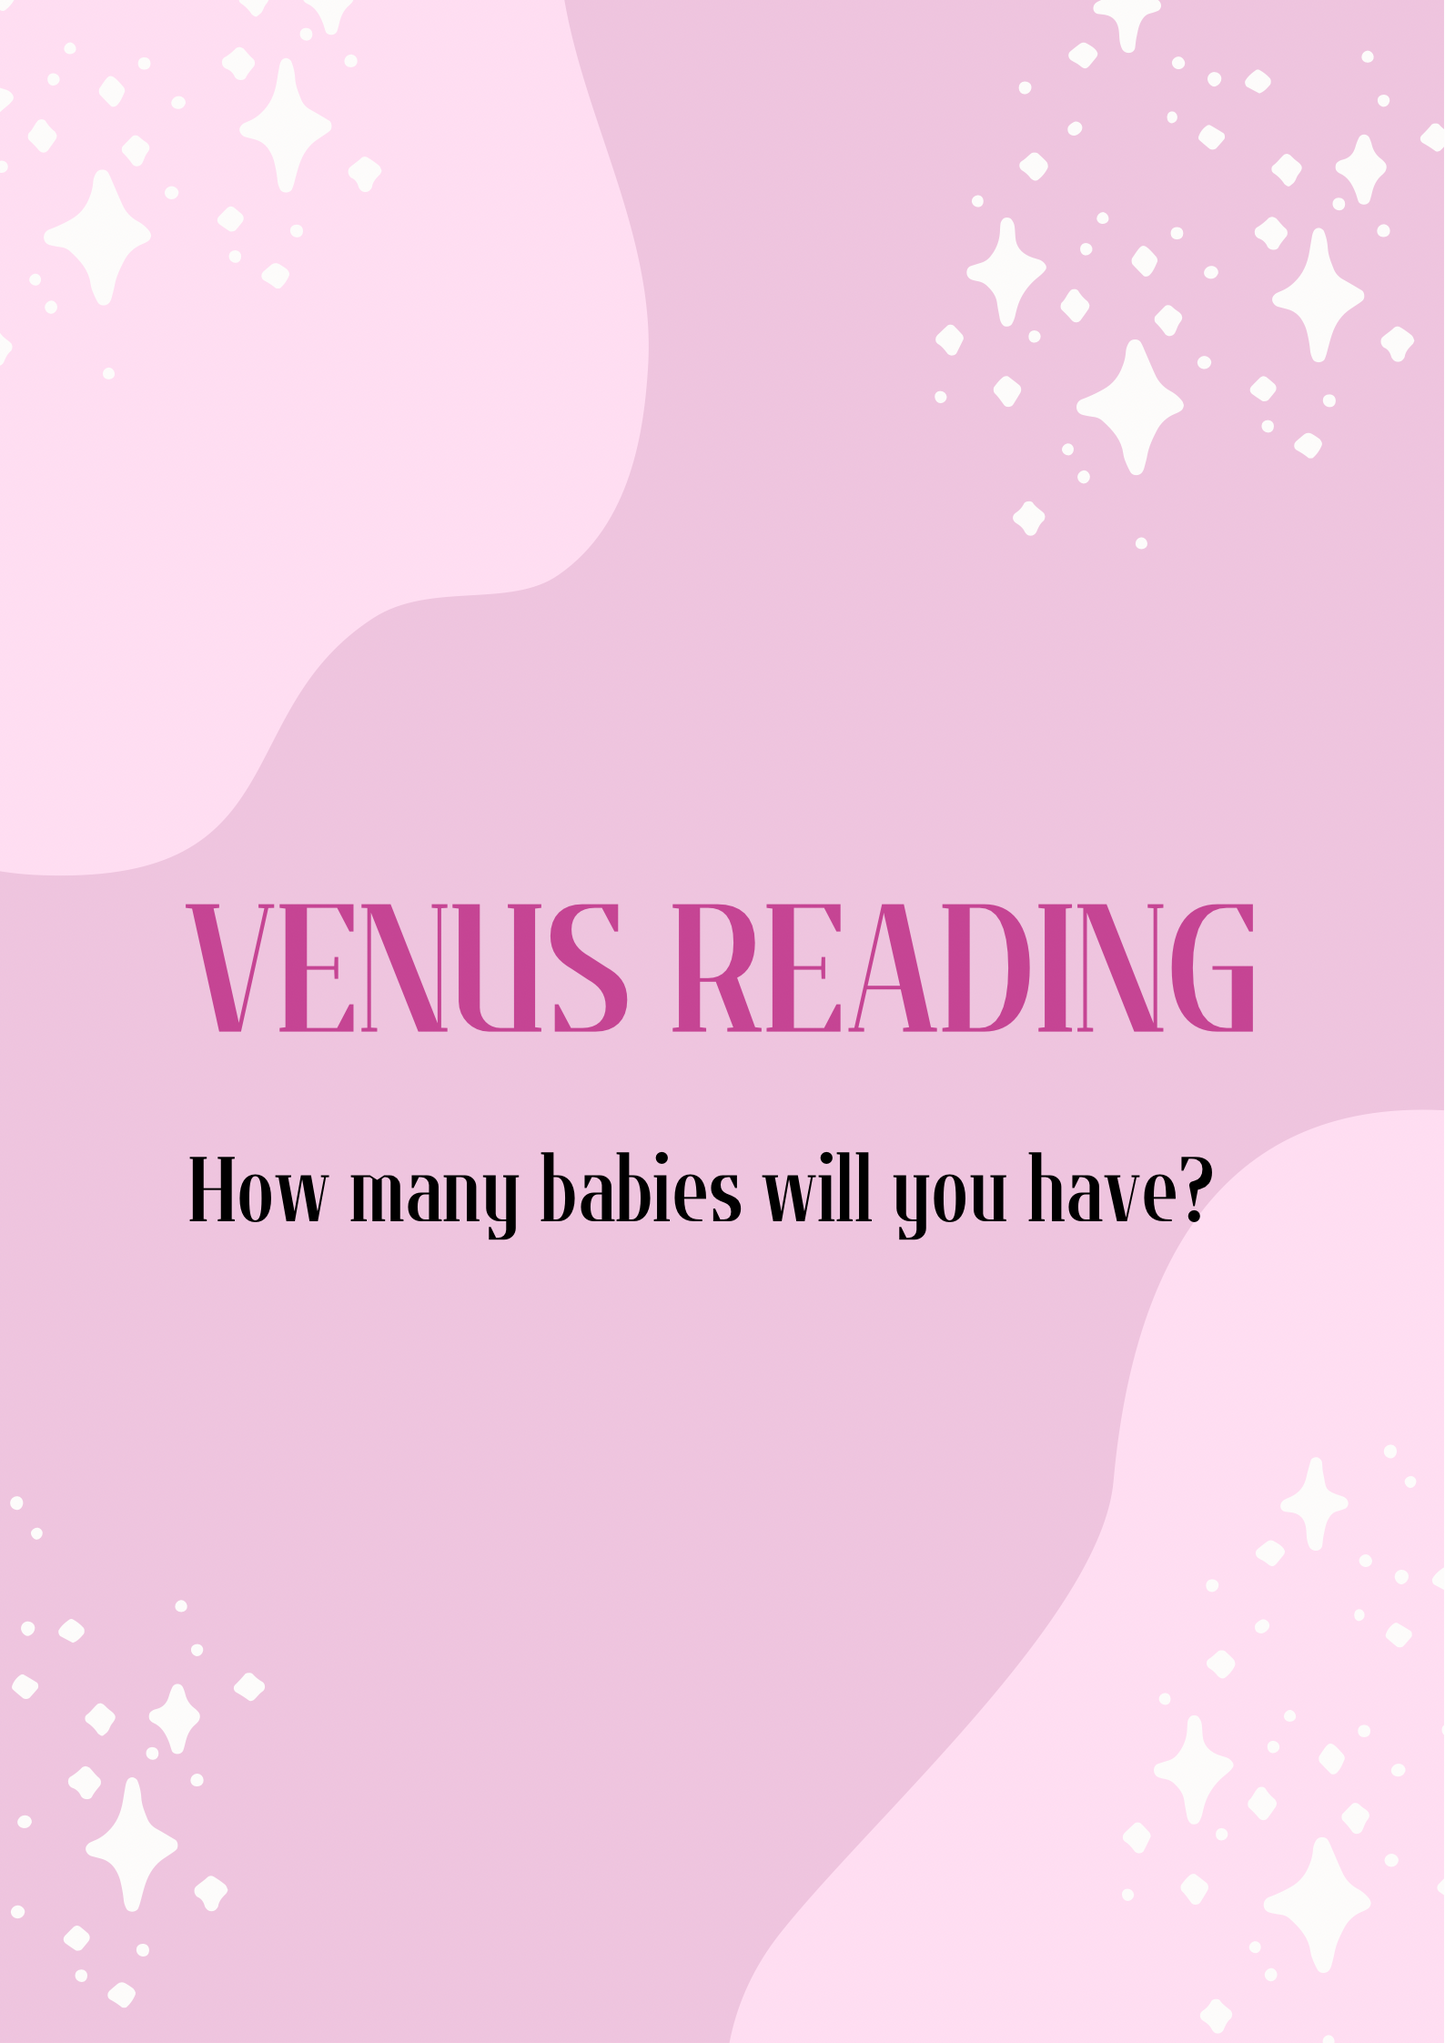 Venus Reading ( How many babies?)